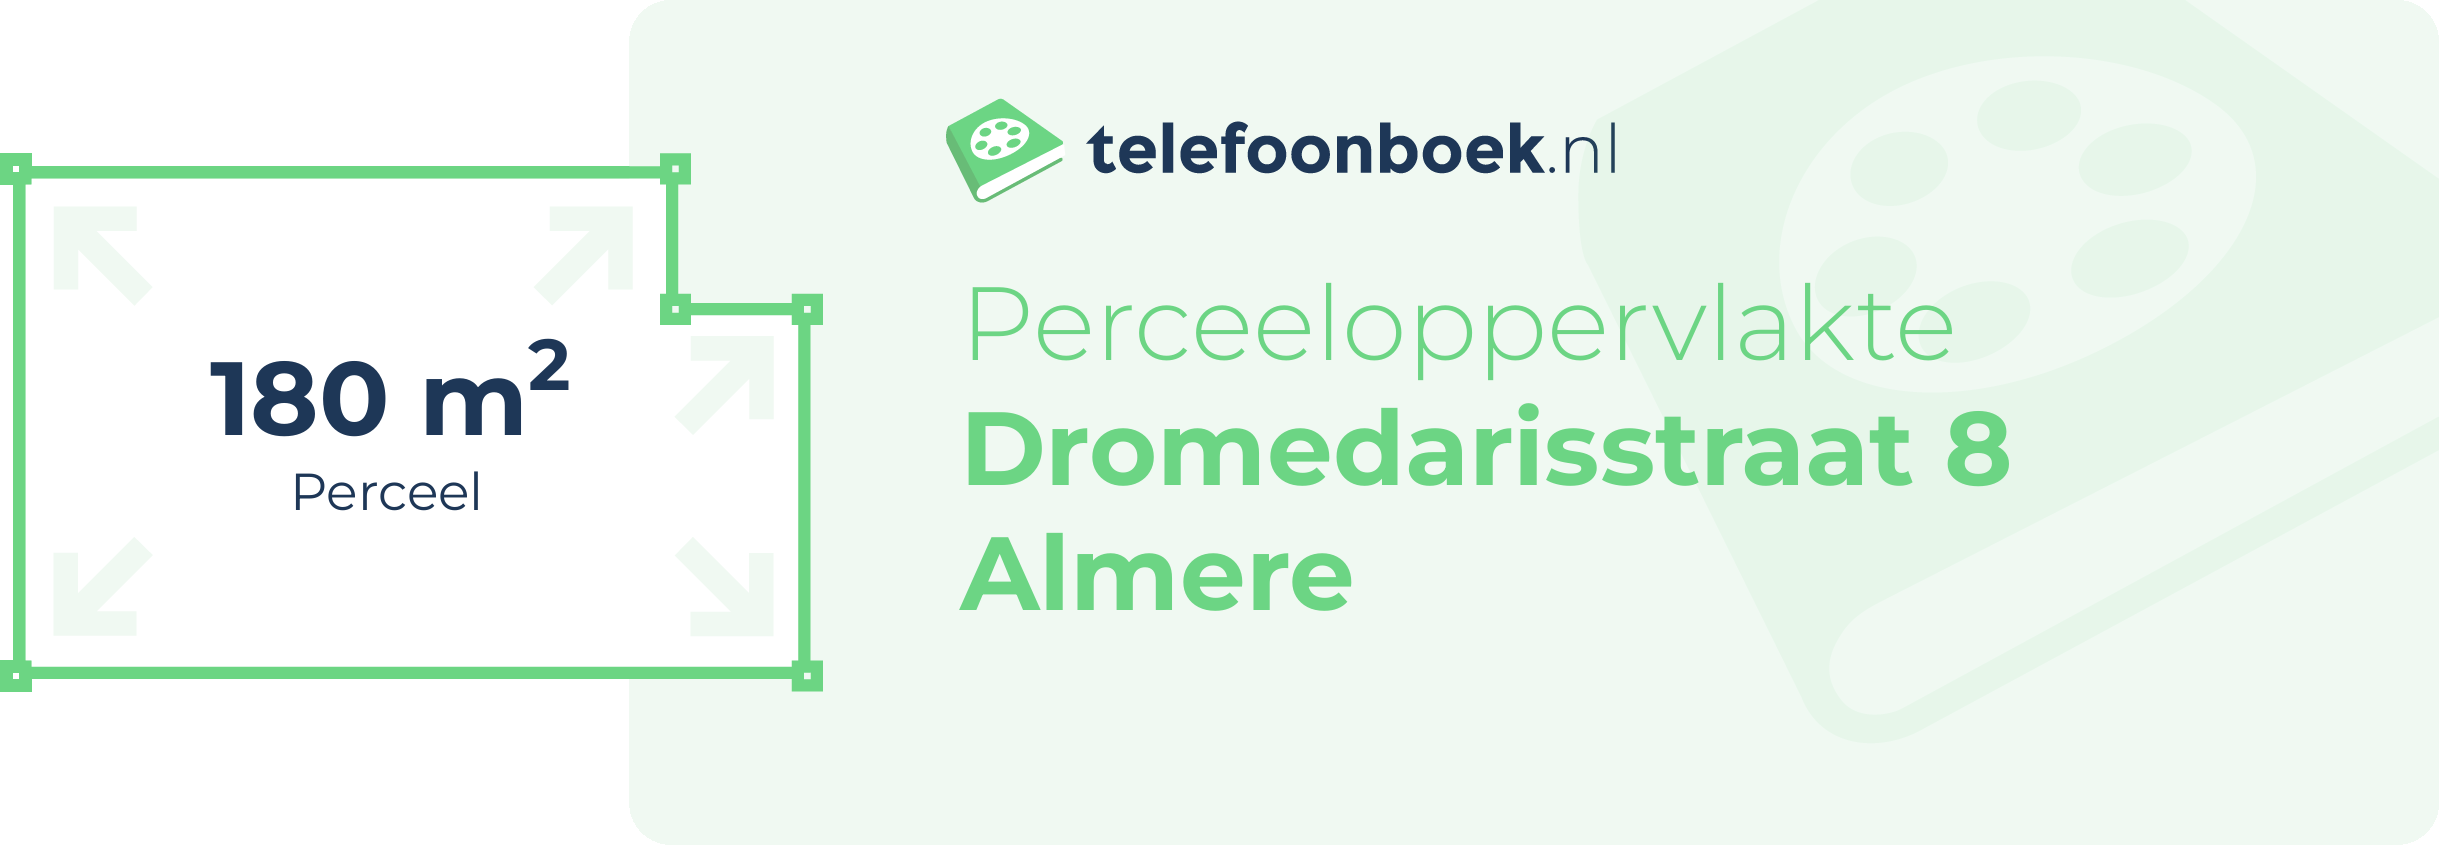 Perceeloppervlakte Dromedarisstraat 8 Almere